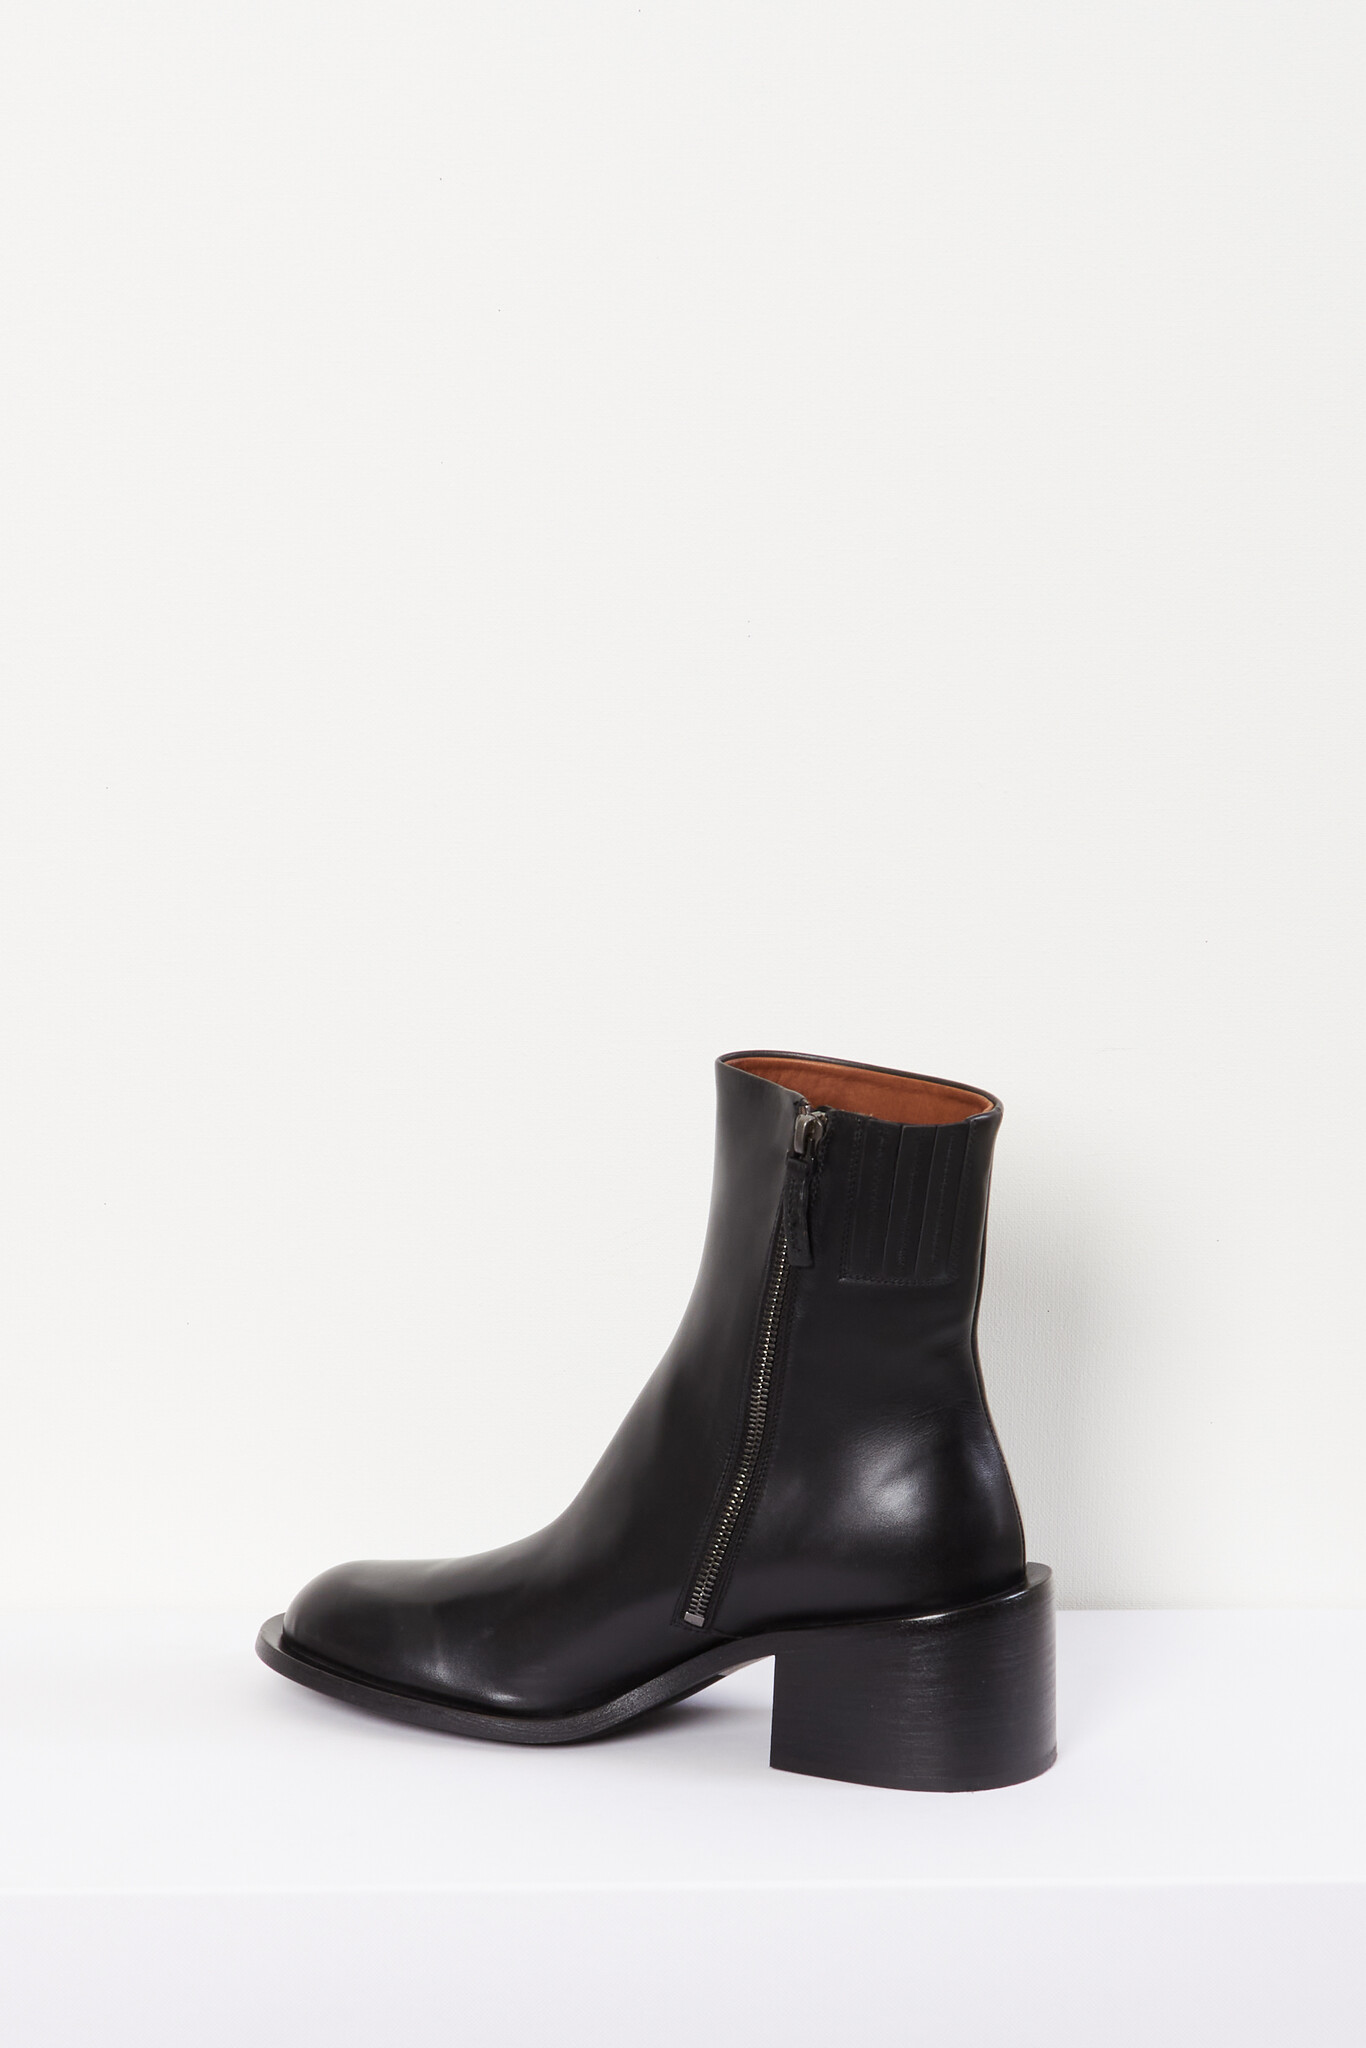 Marsell - Allucino short boots